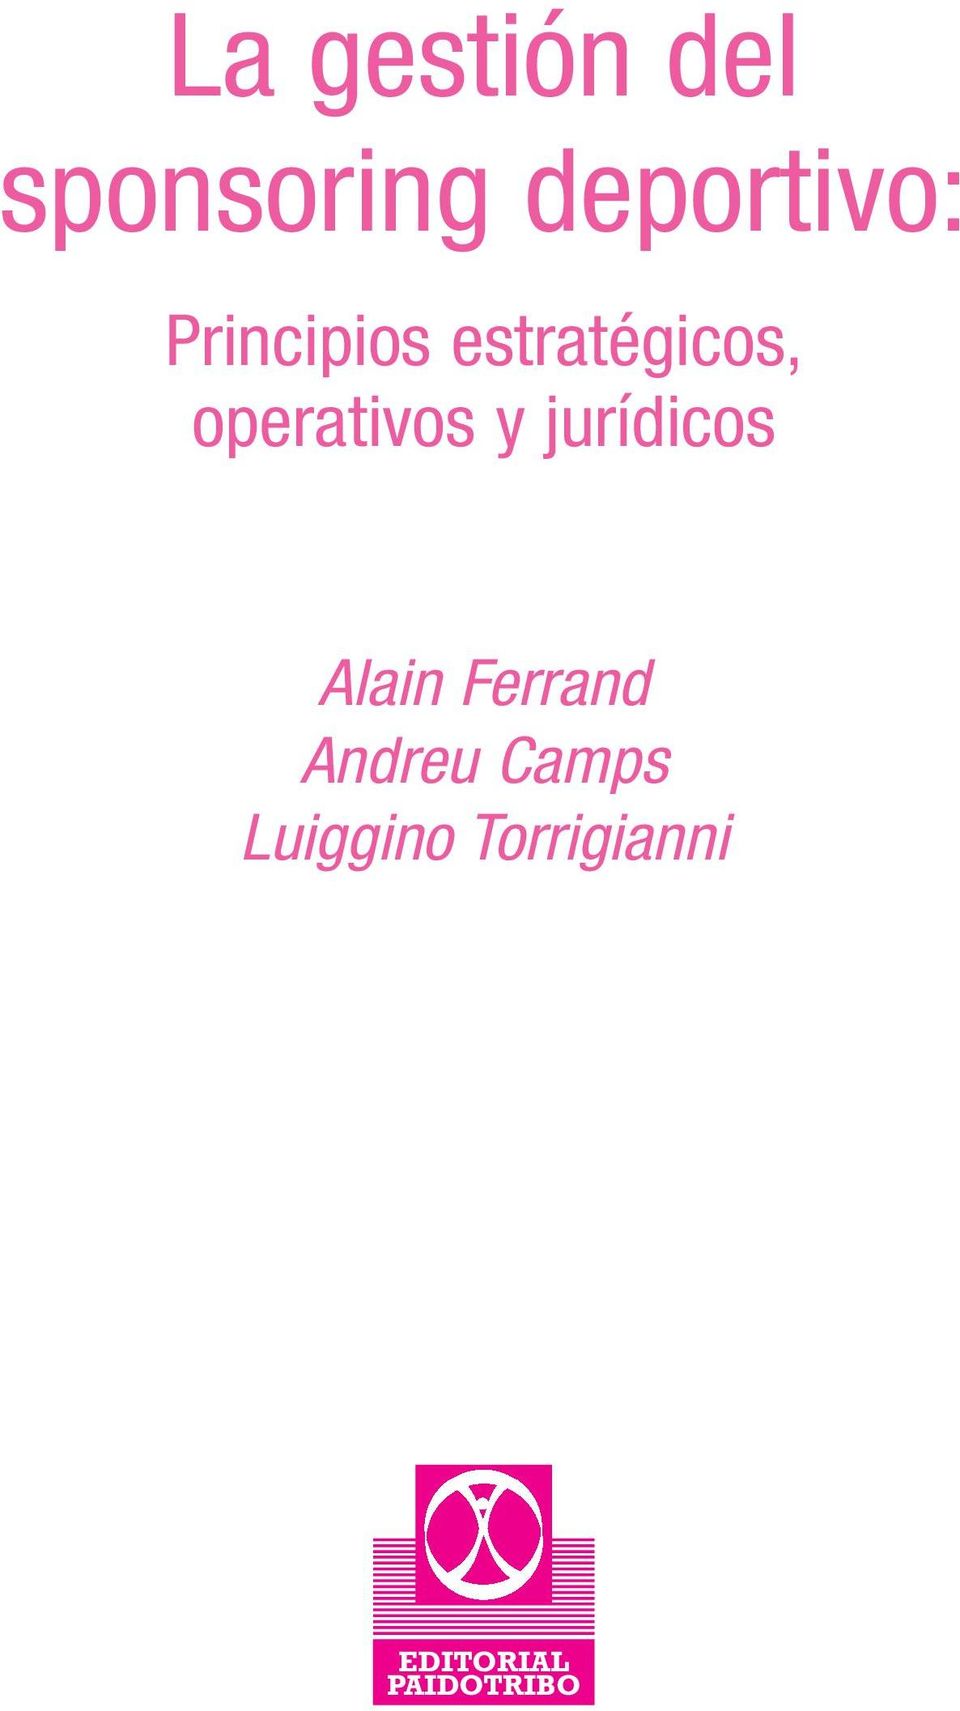 jurídicos Alain Ferrand Andreu Camps